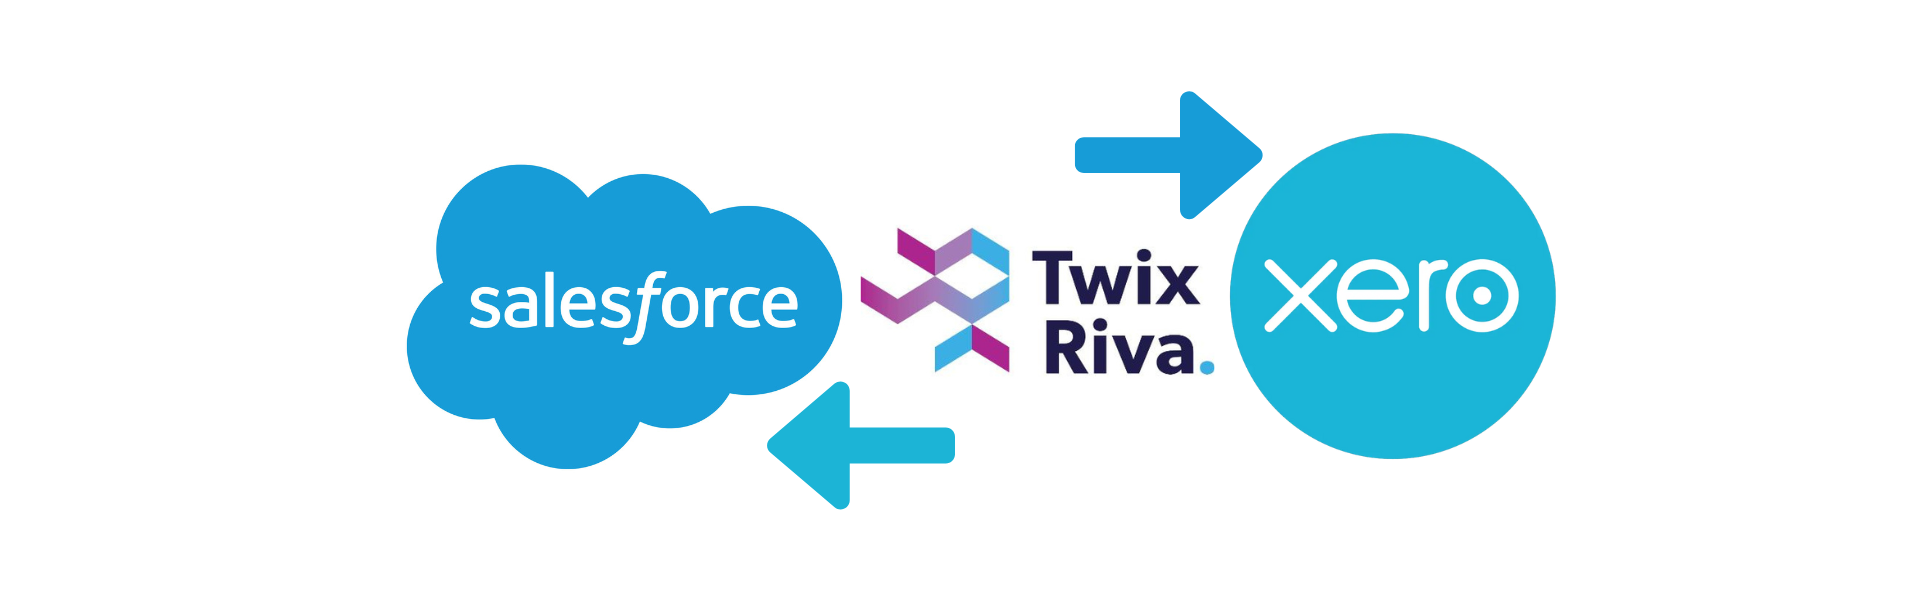 TwixRiva Logo